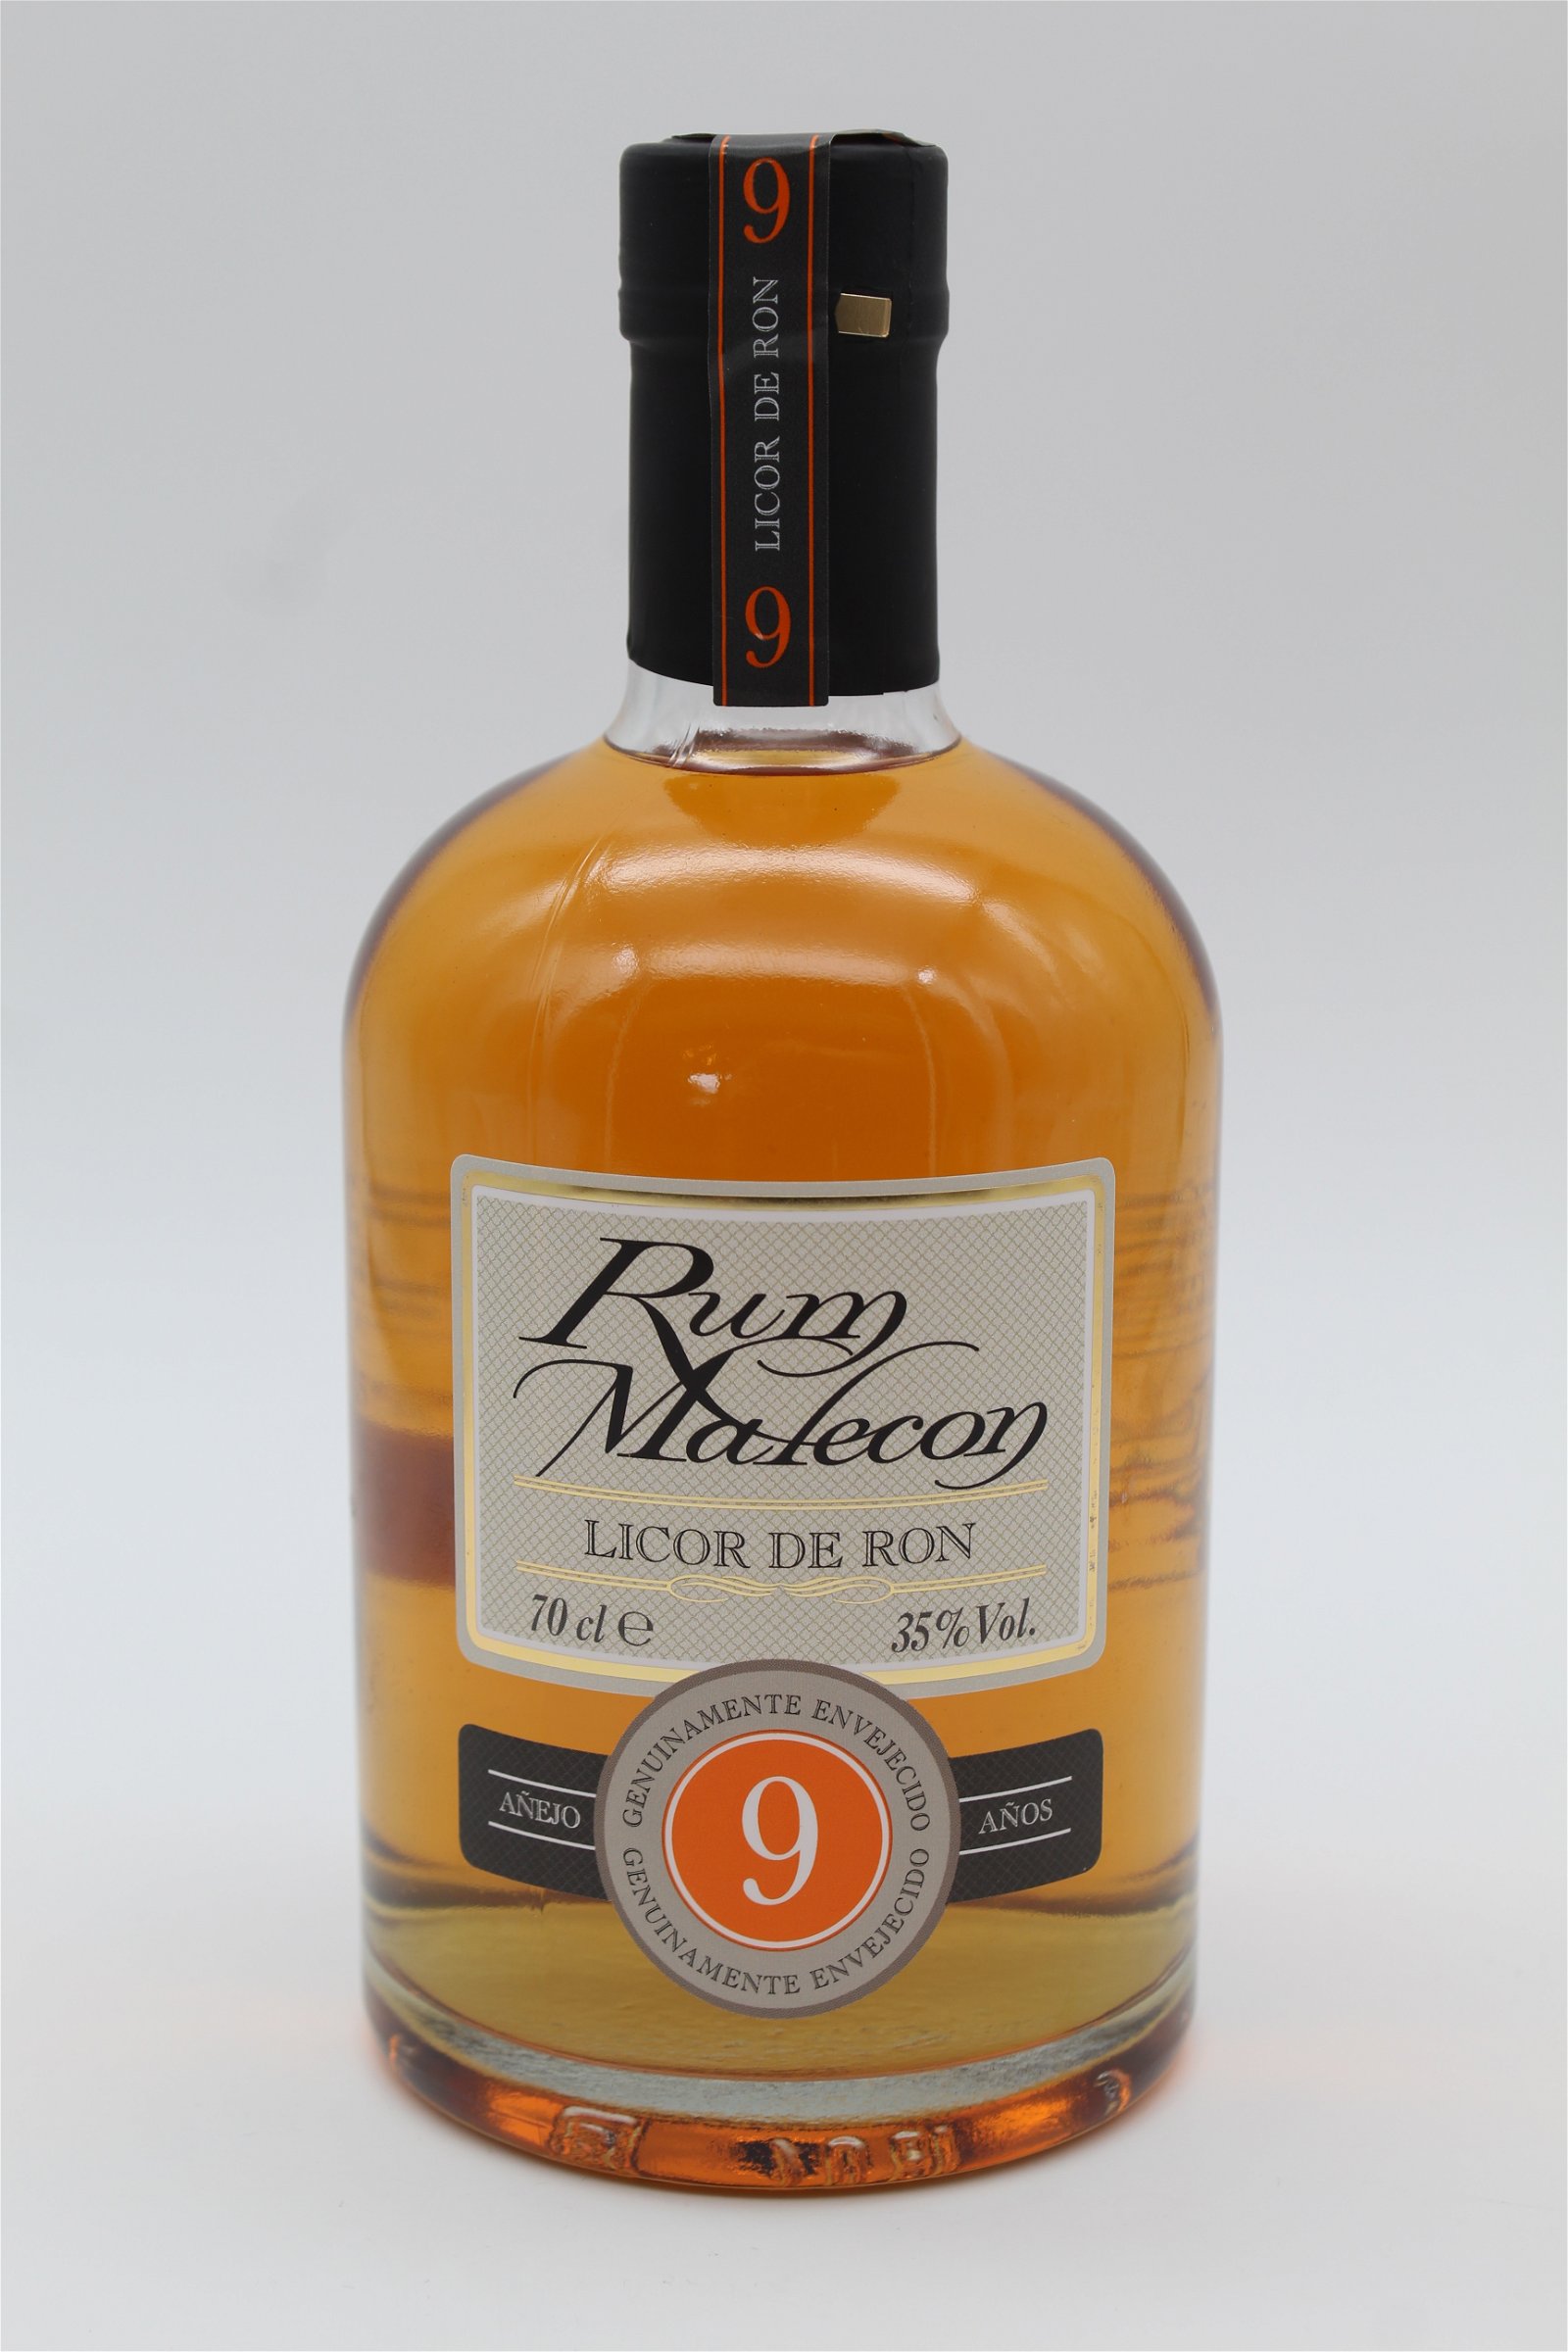 Rum Malecon Licor de Ron 9 Anos